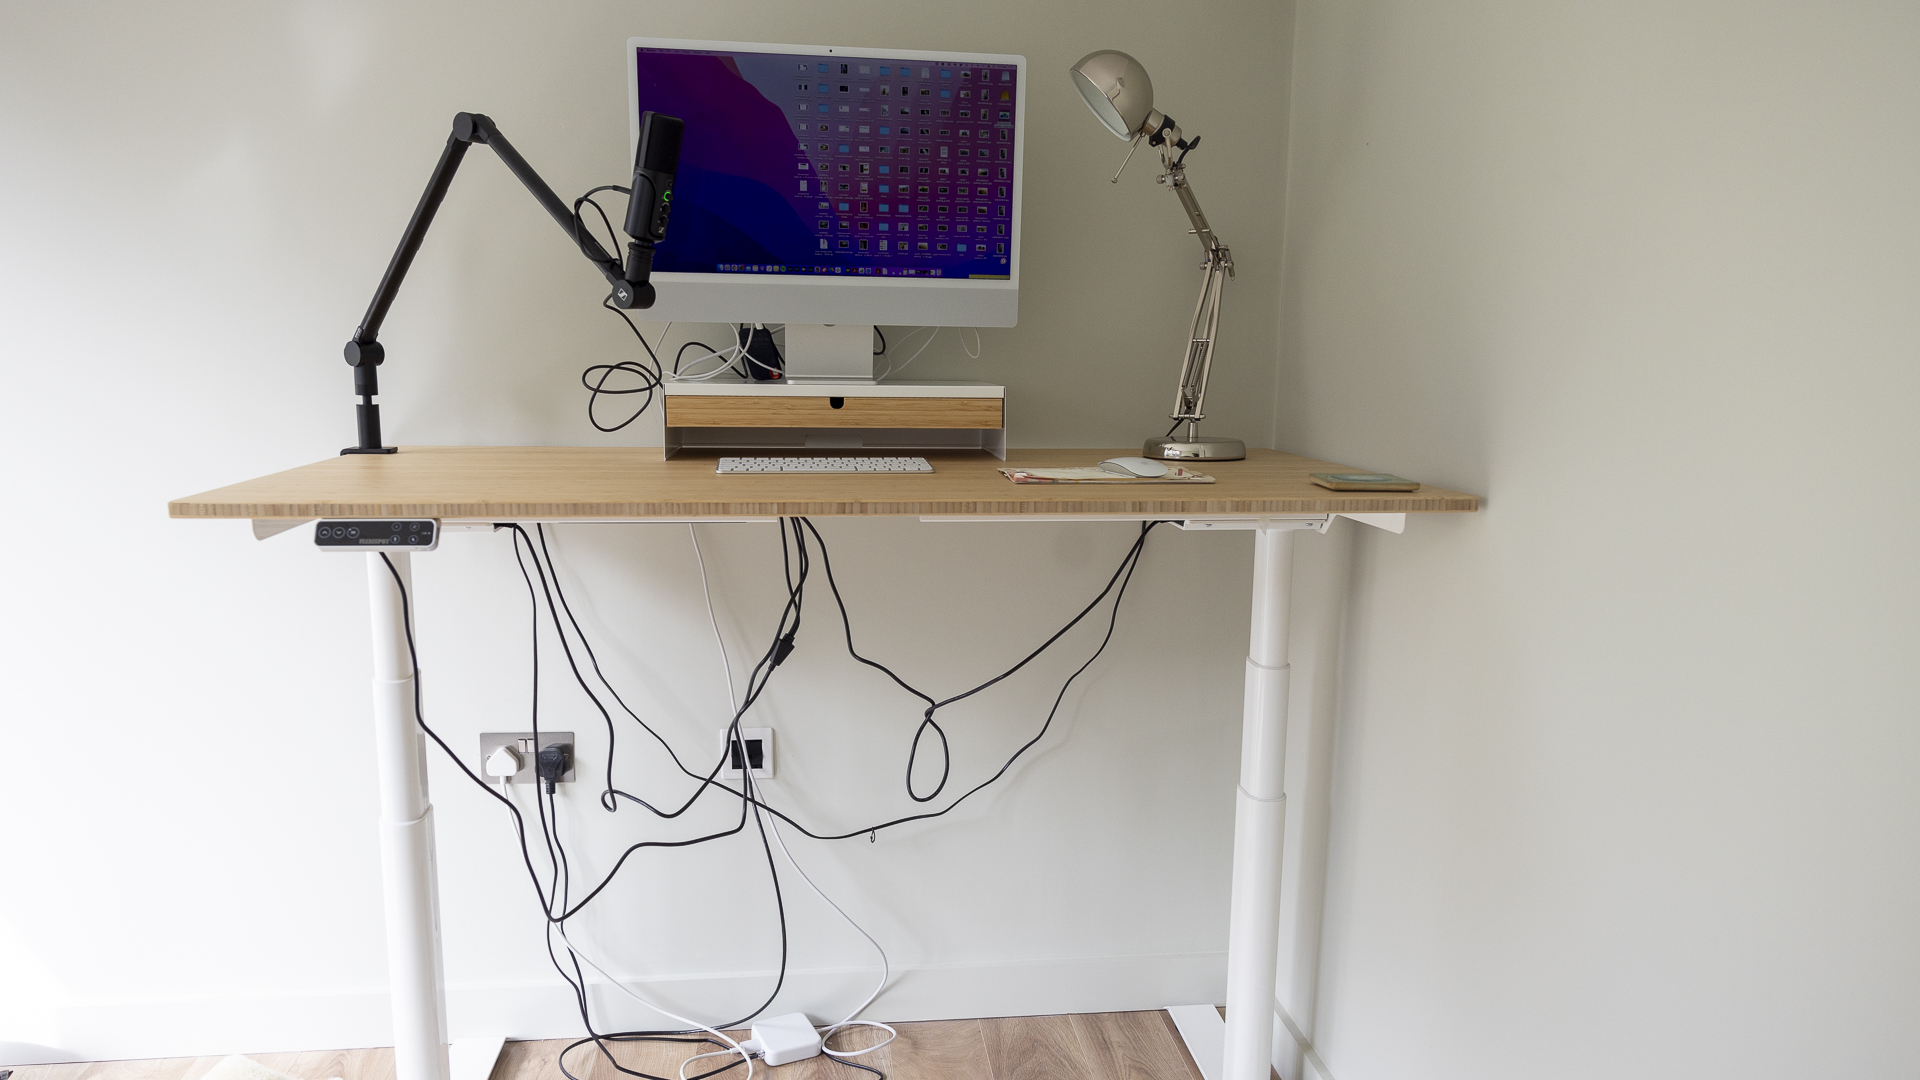 Flexispot E8 Standing Desk review image showing the desk fully erect.